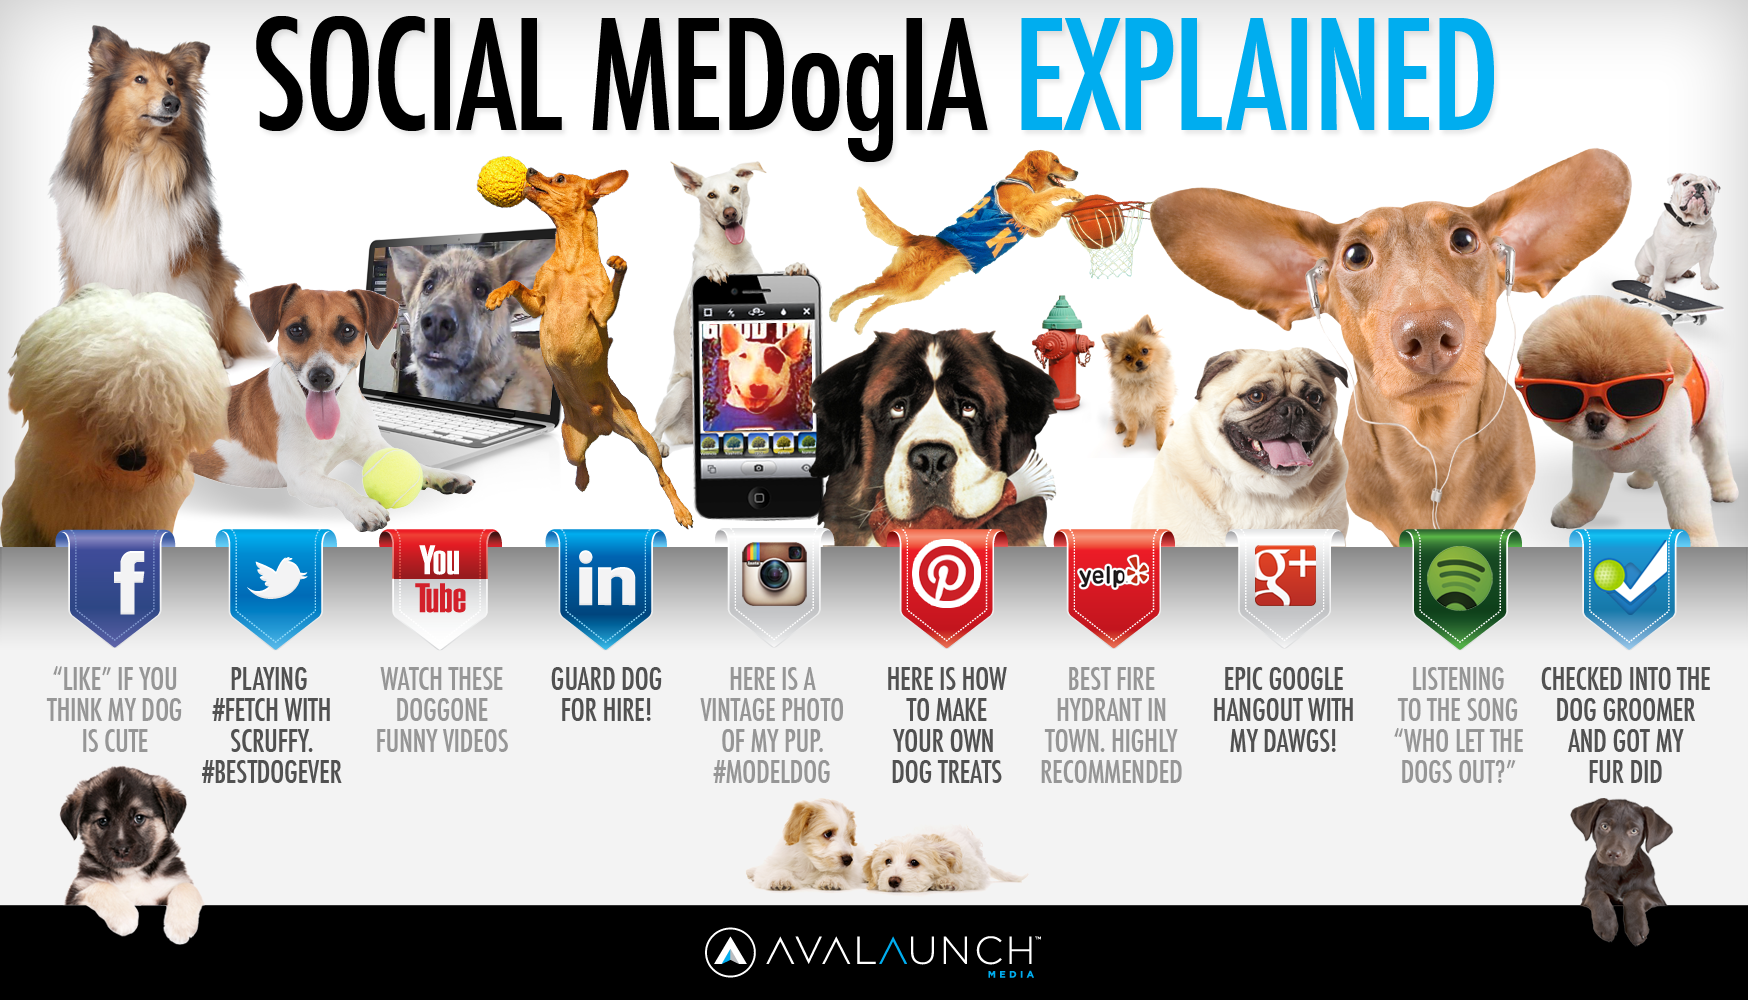 THE WINNER! Social MEDogIA infographic, in which dogs explain social media.